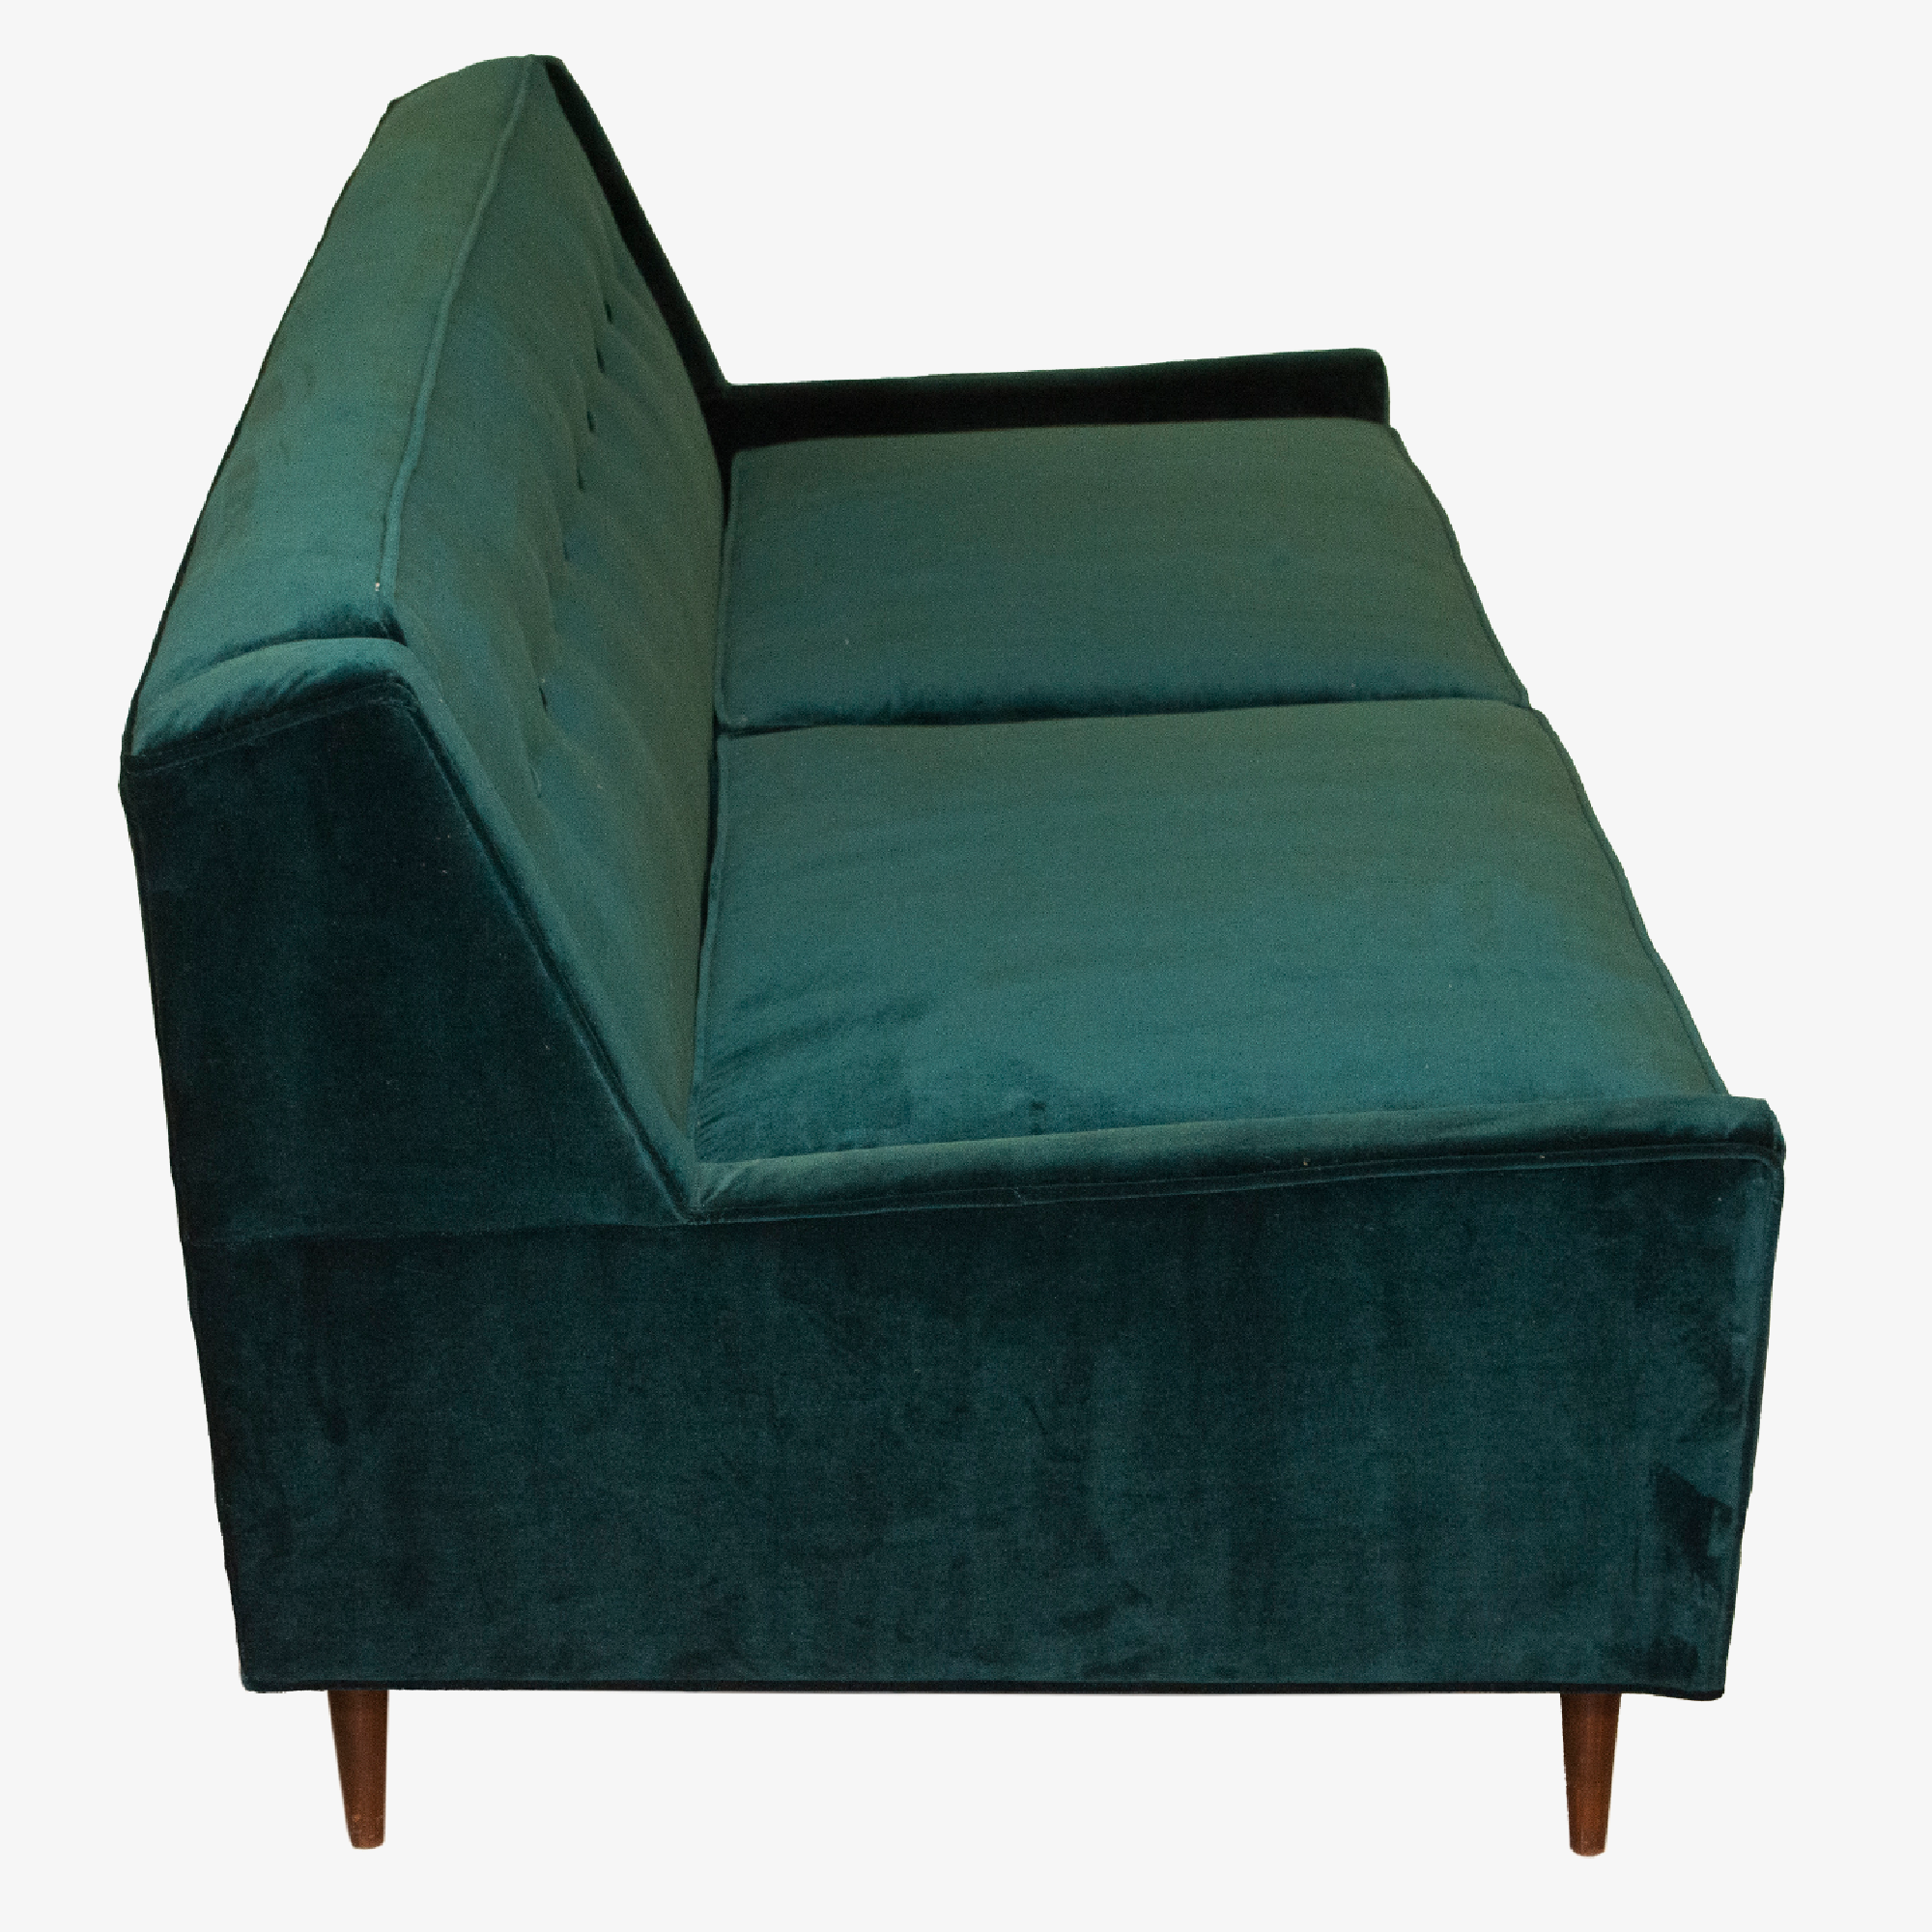 green sofa3.png